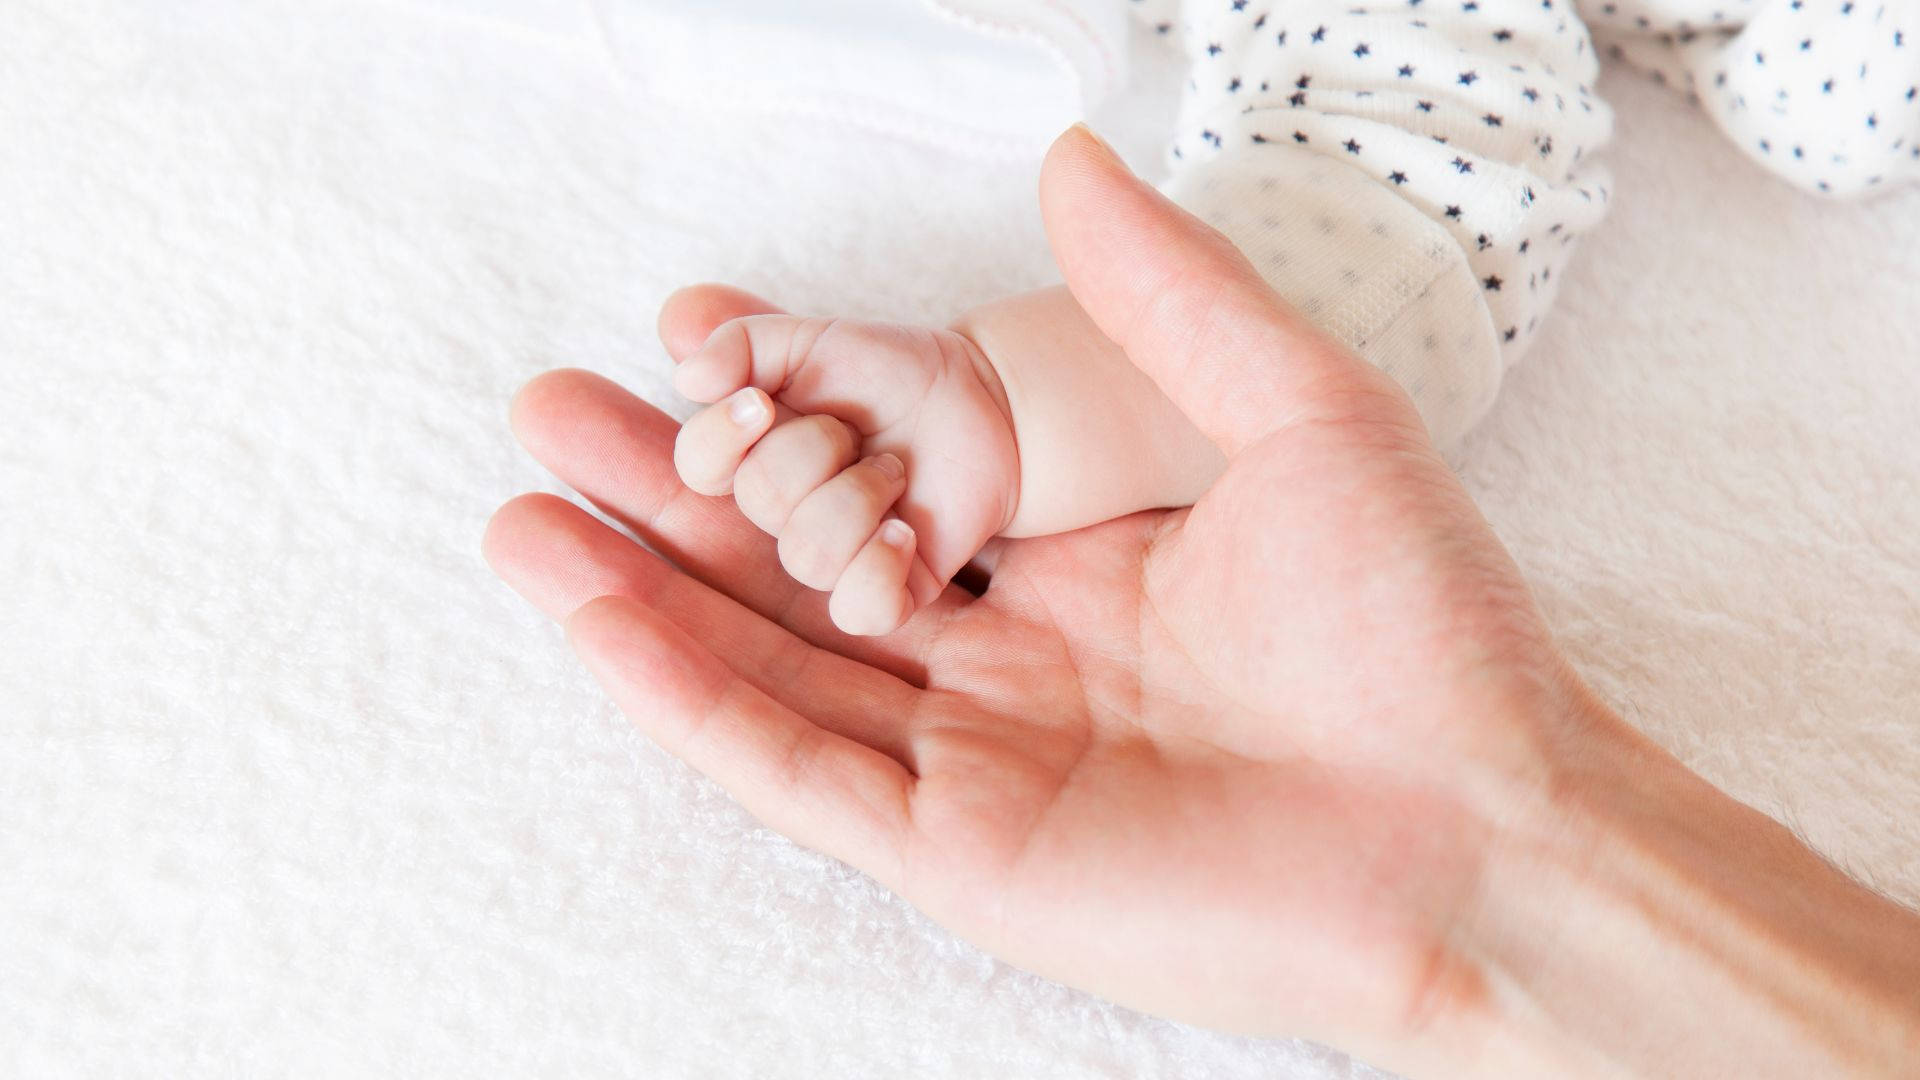 Baby Hand On An Open Hand Wallpaper